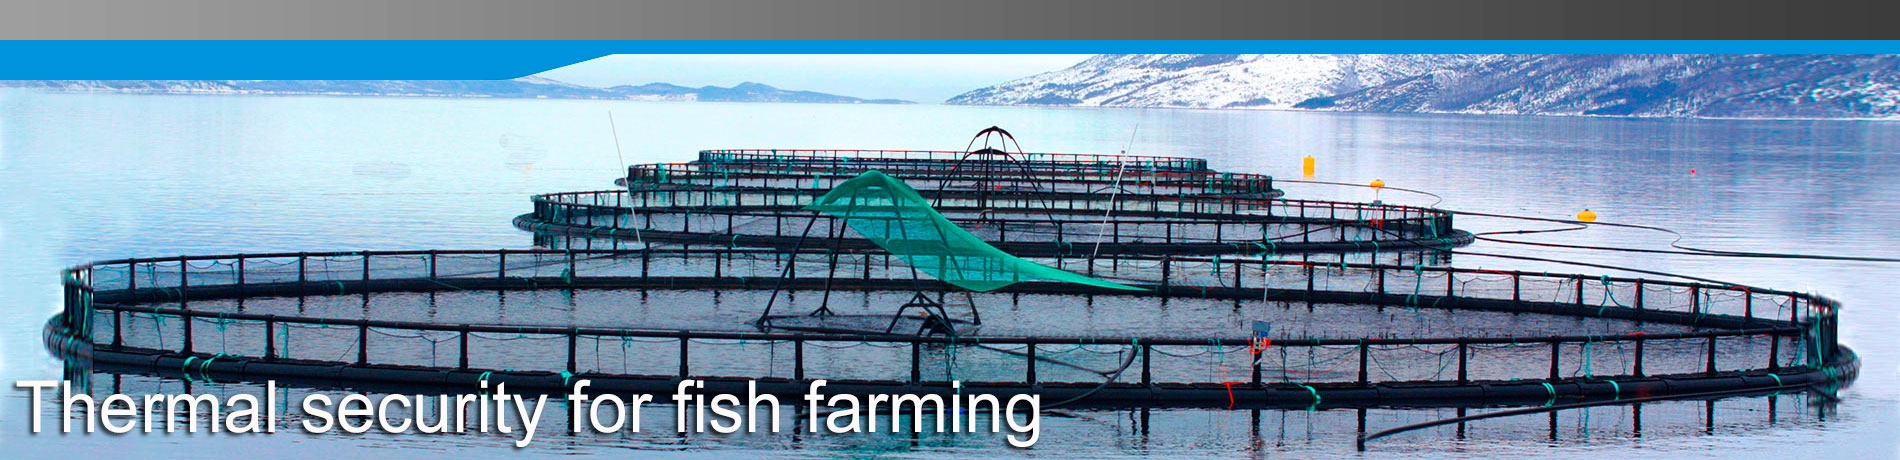 FISH FARMING SOLUTIONS